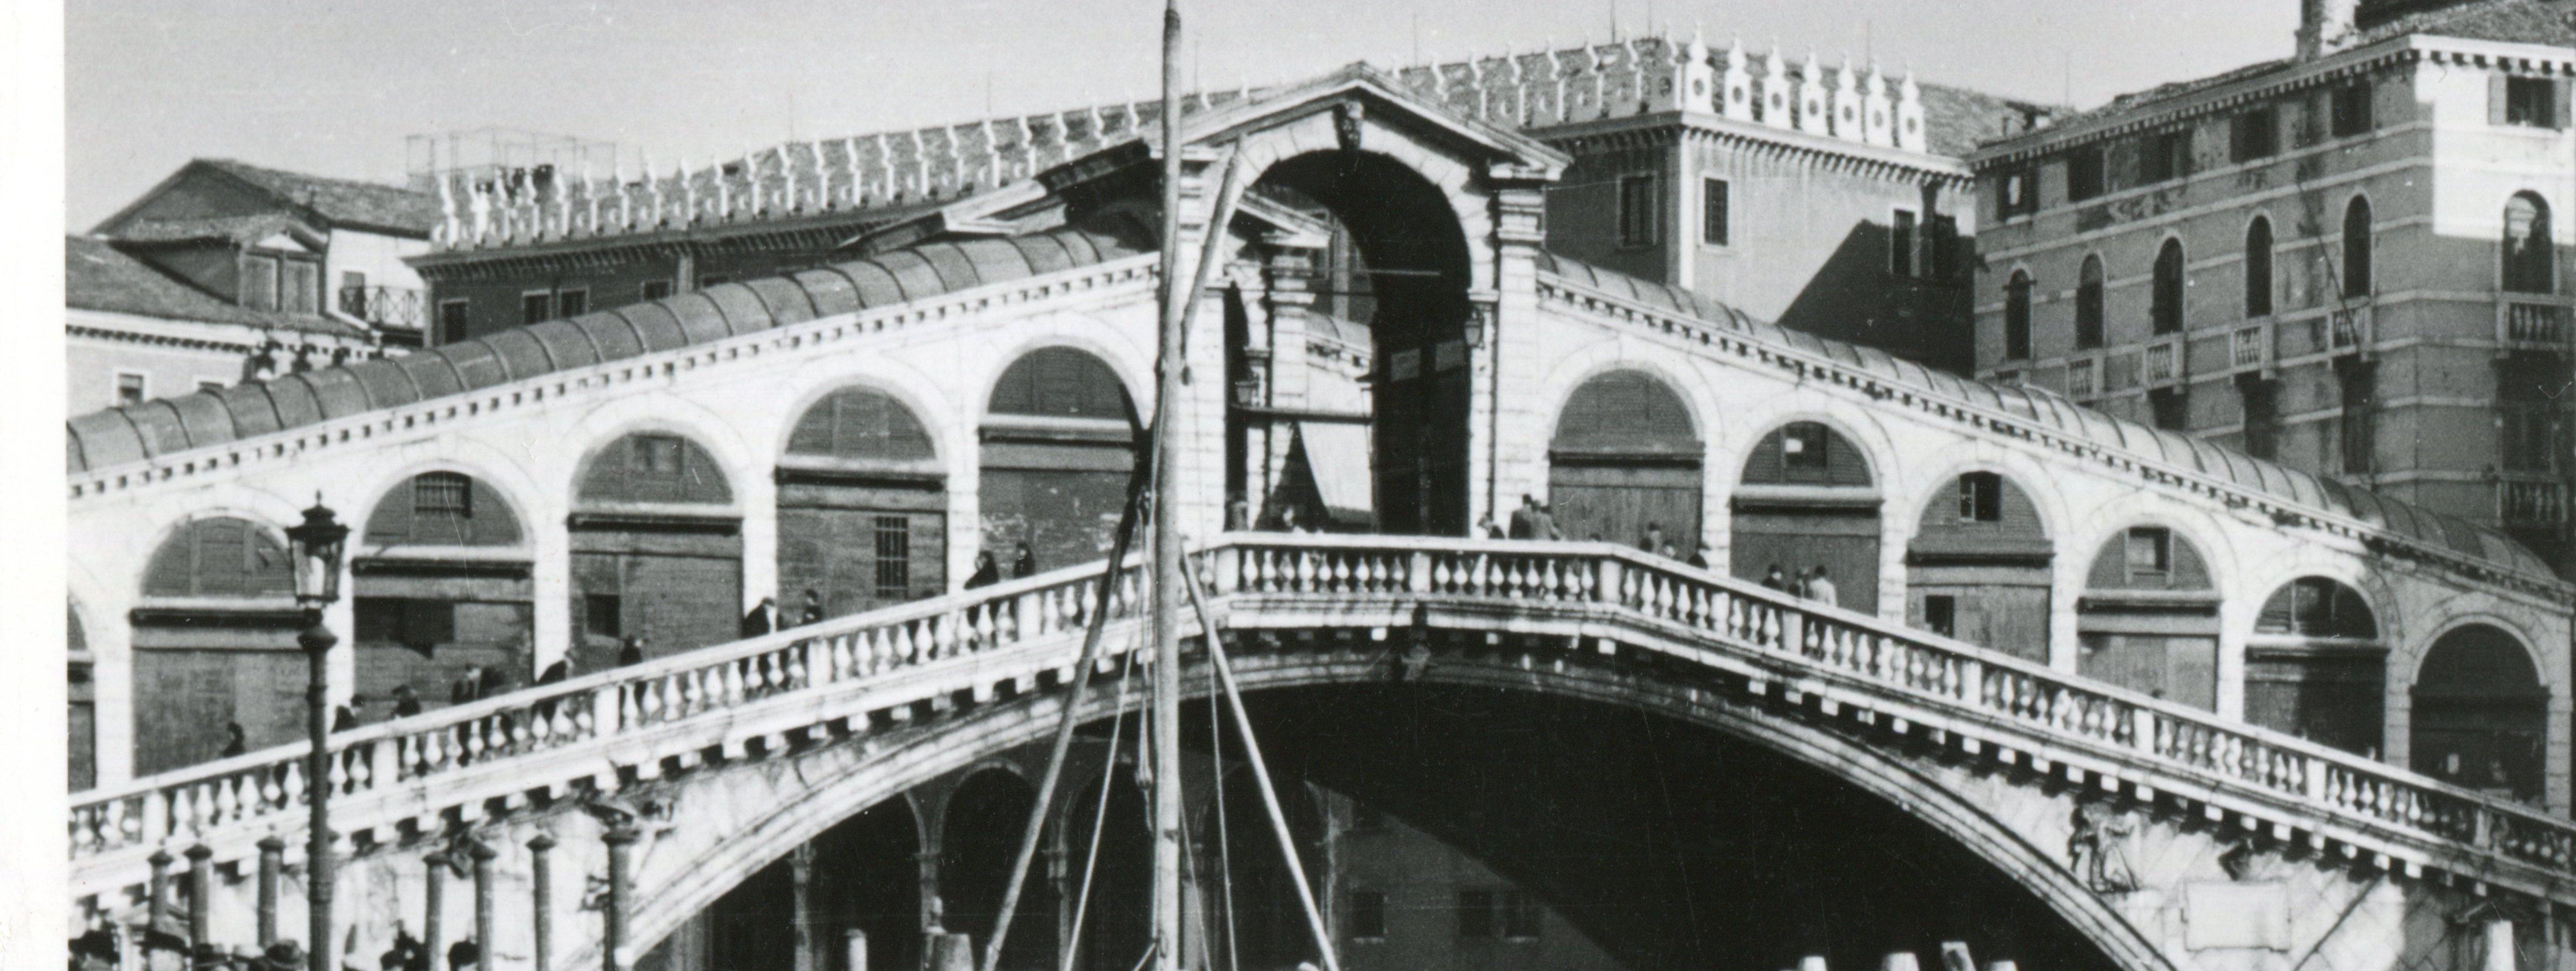 Venice - Rialto Bridge 1954 - Photograph by Erich Andres